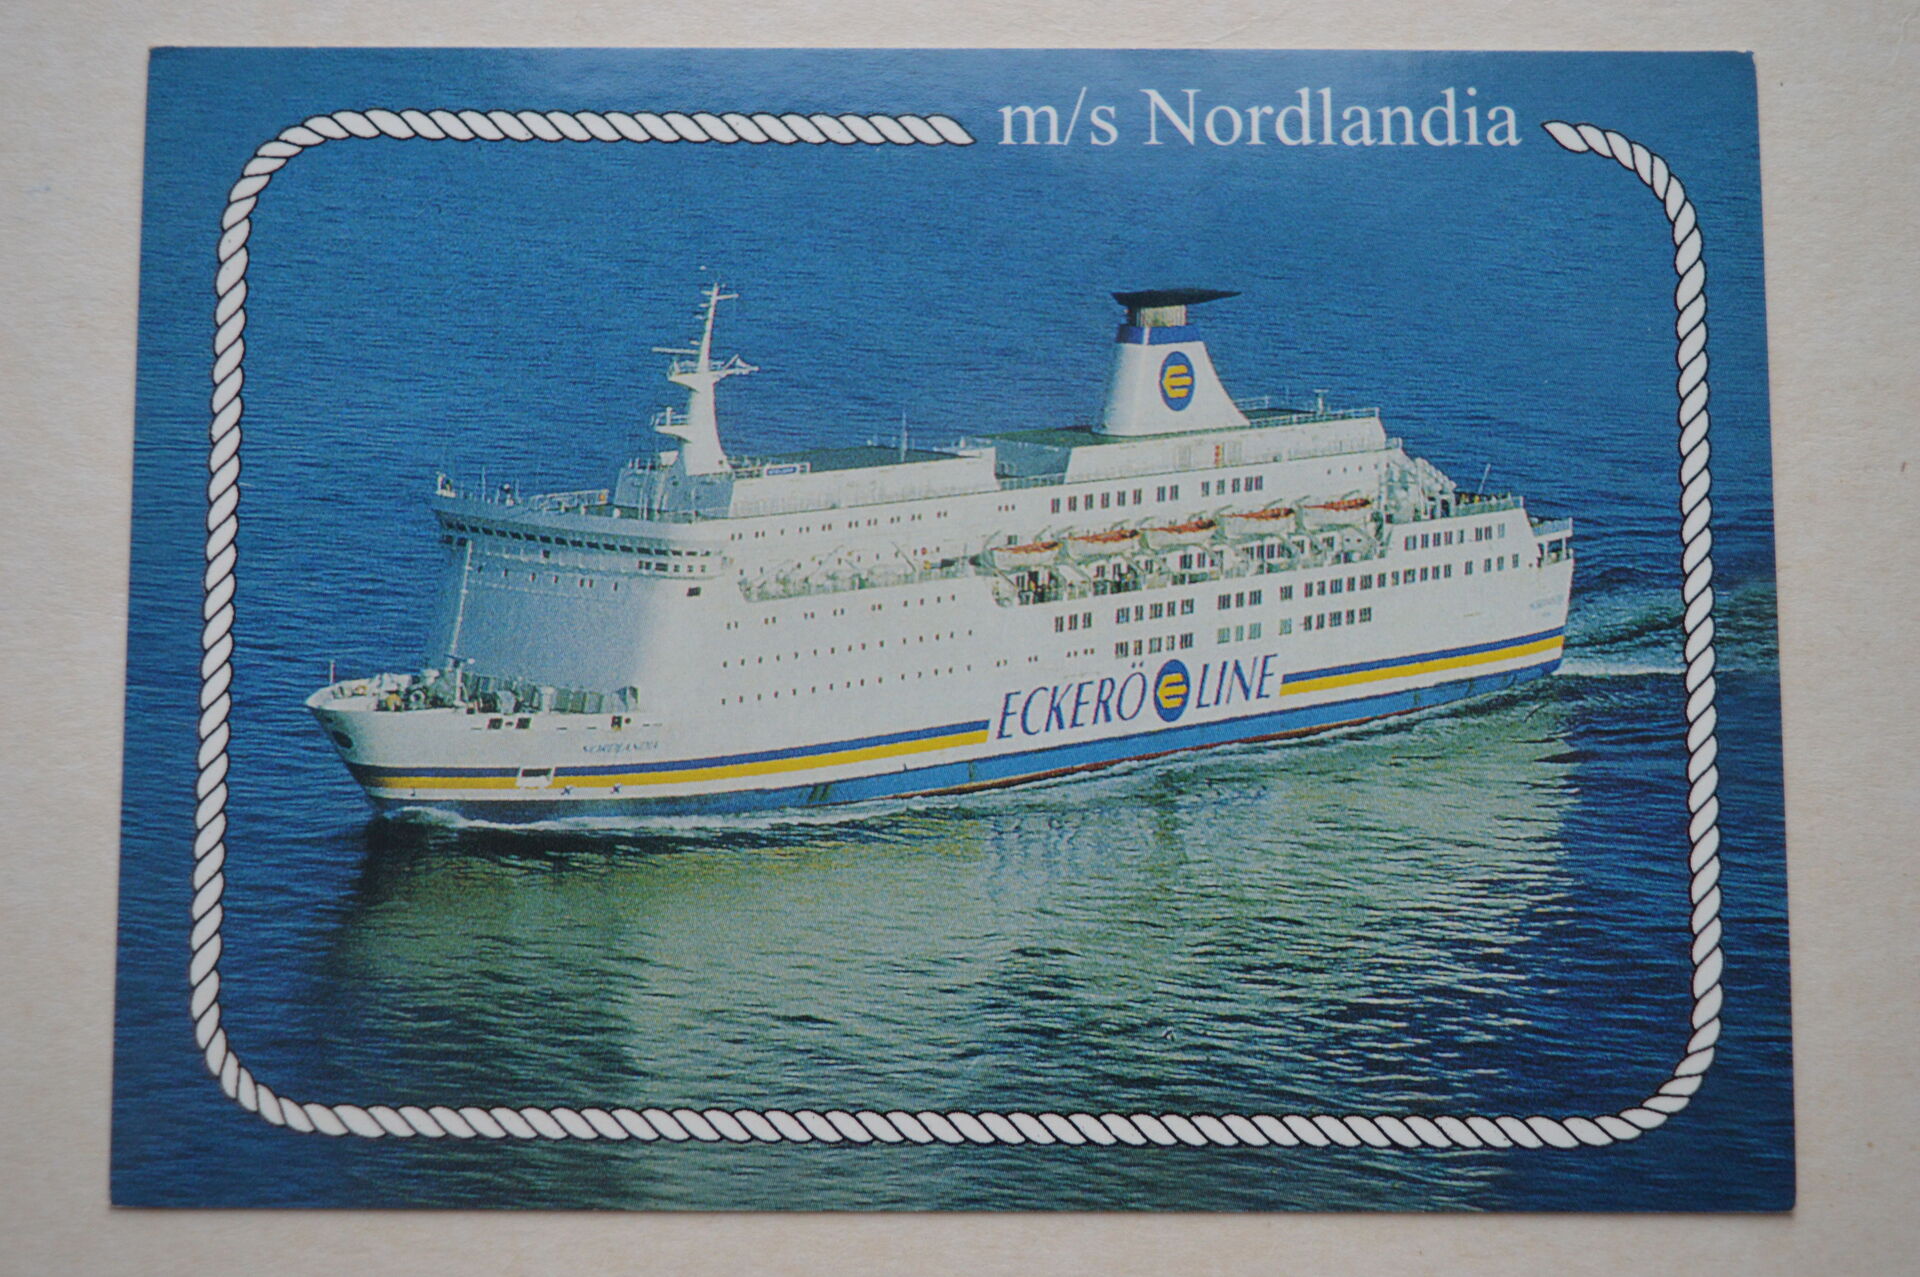 MB6 reisilaev M/S Nordlandia Eckerö Line (130353023) 